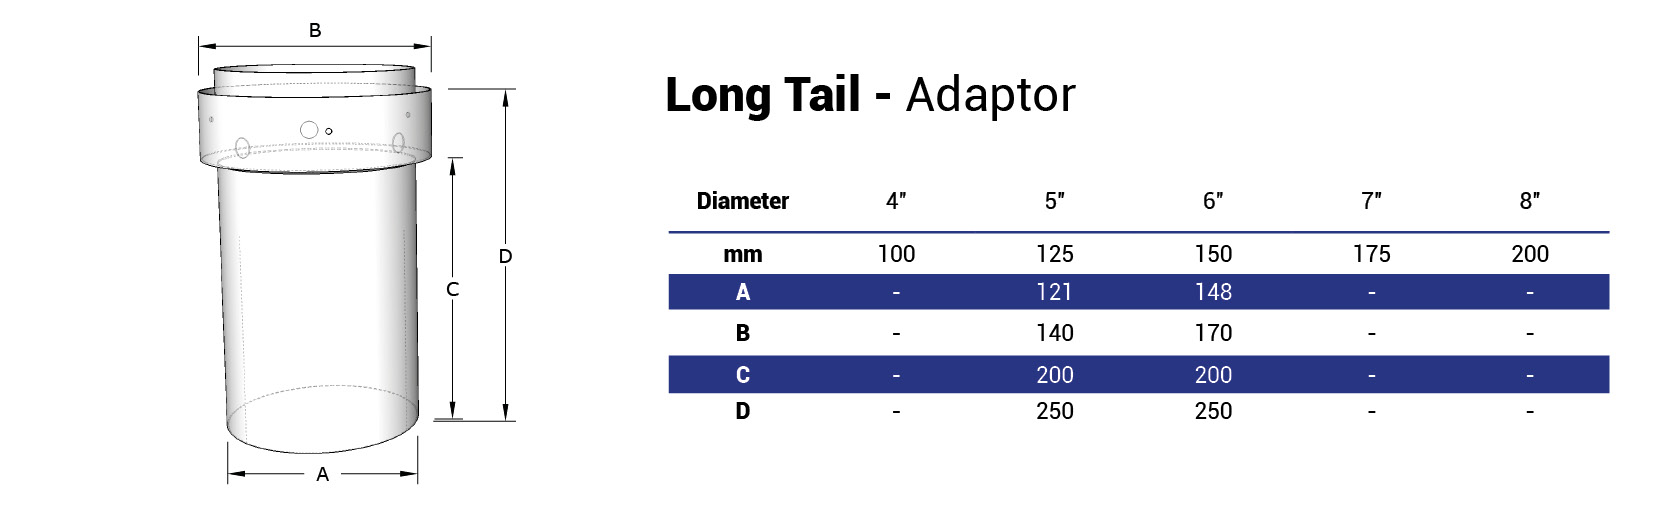 Long tail Adaptor